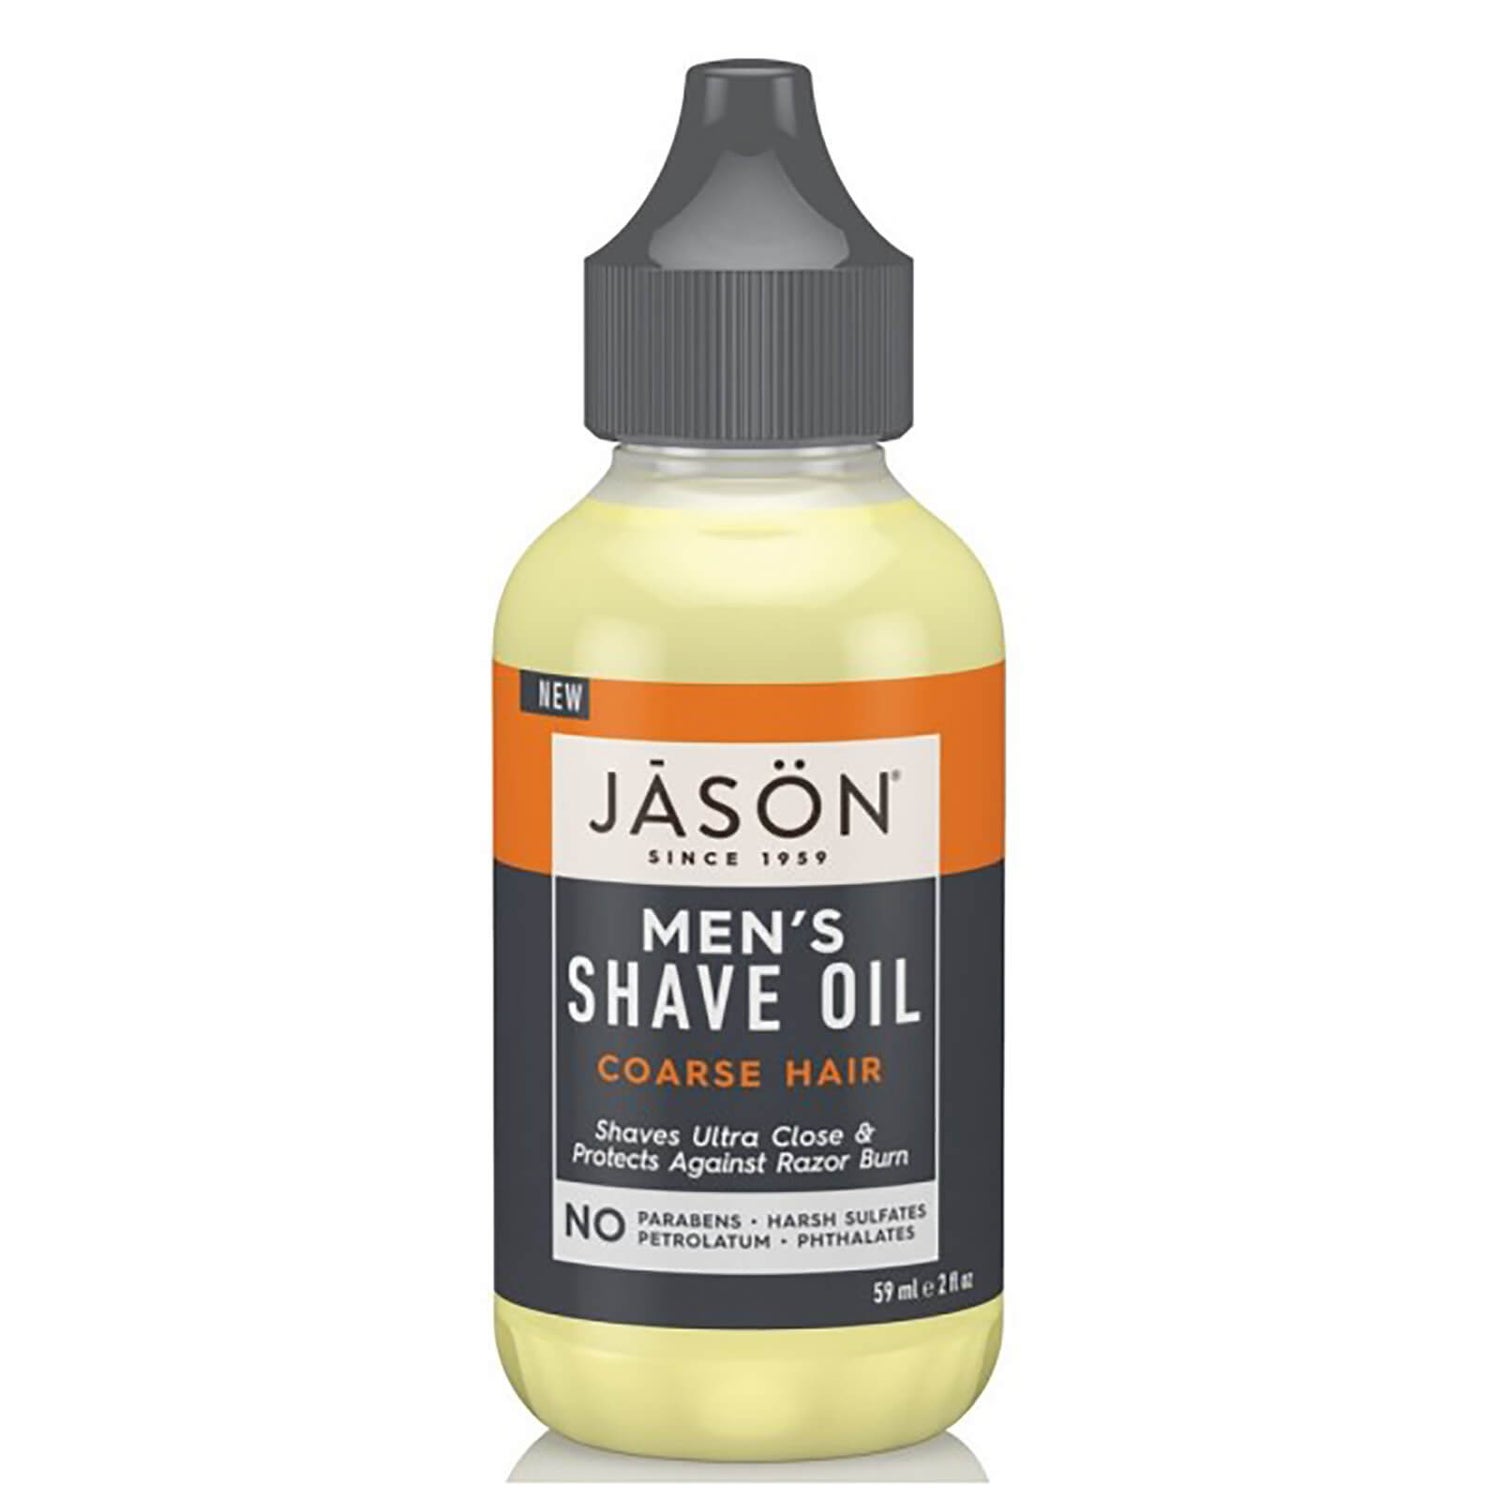 JASON Men's Shave Oil - Coarse Hair